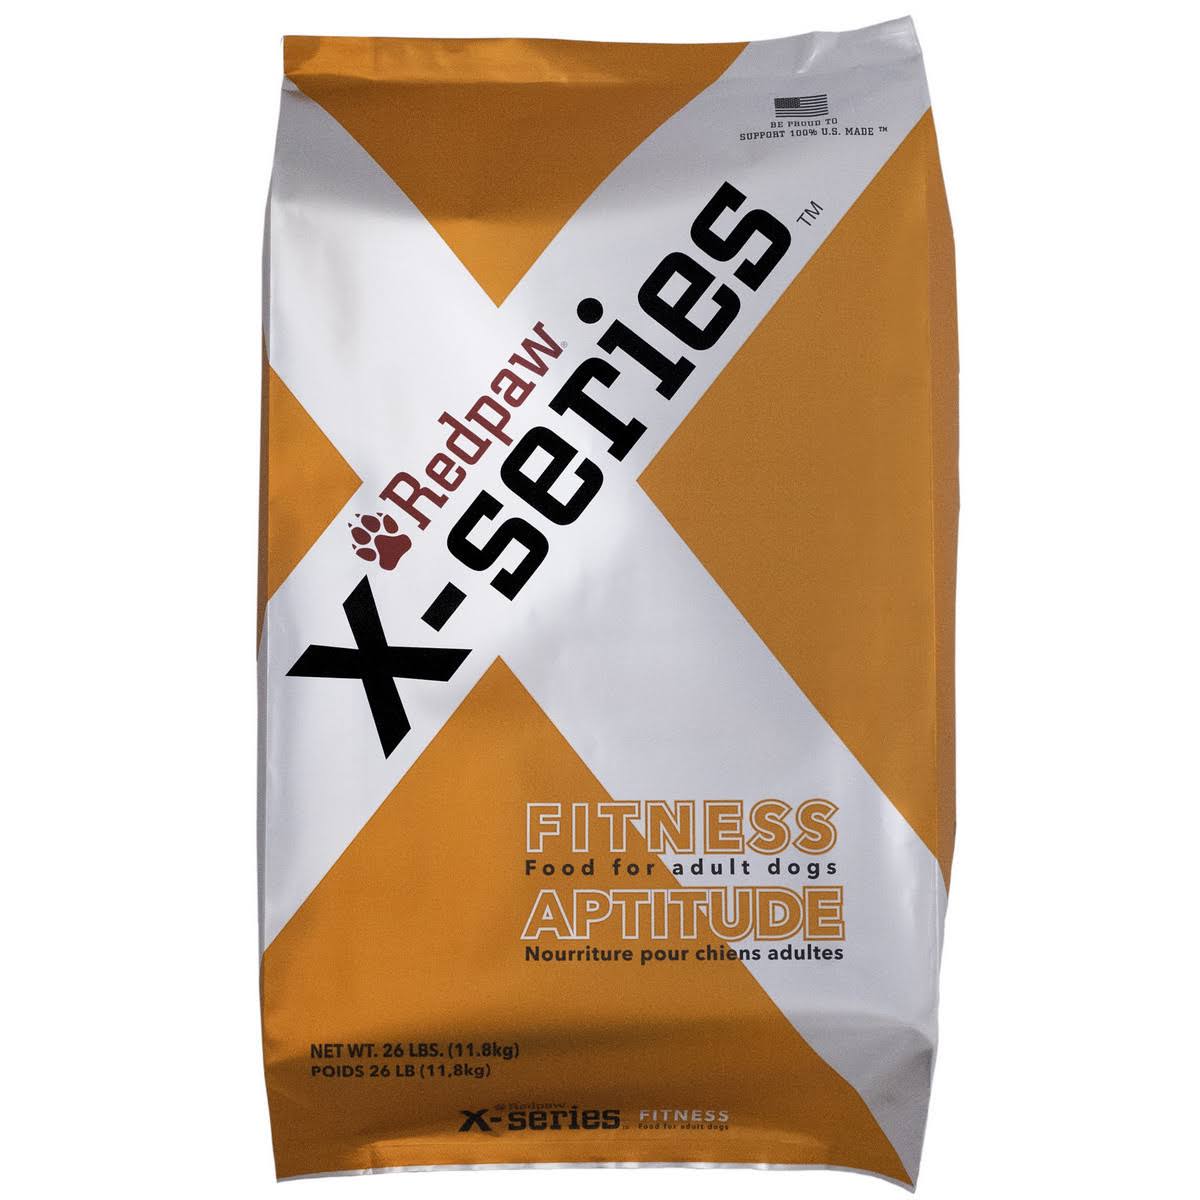 Redpaw X-series Fitness Adult Dog Food - 12lbs